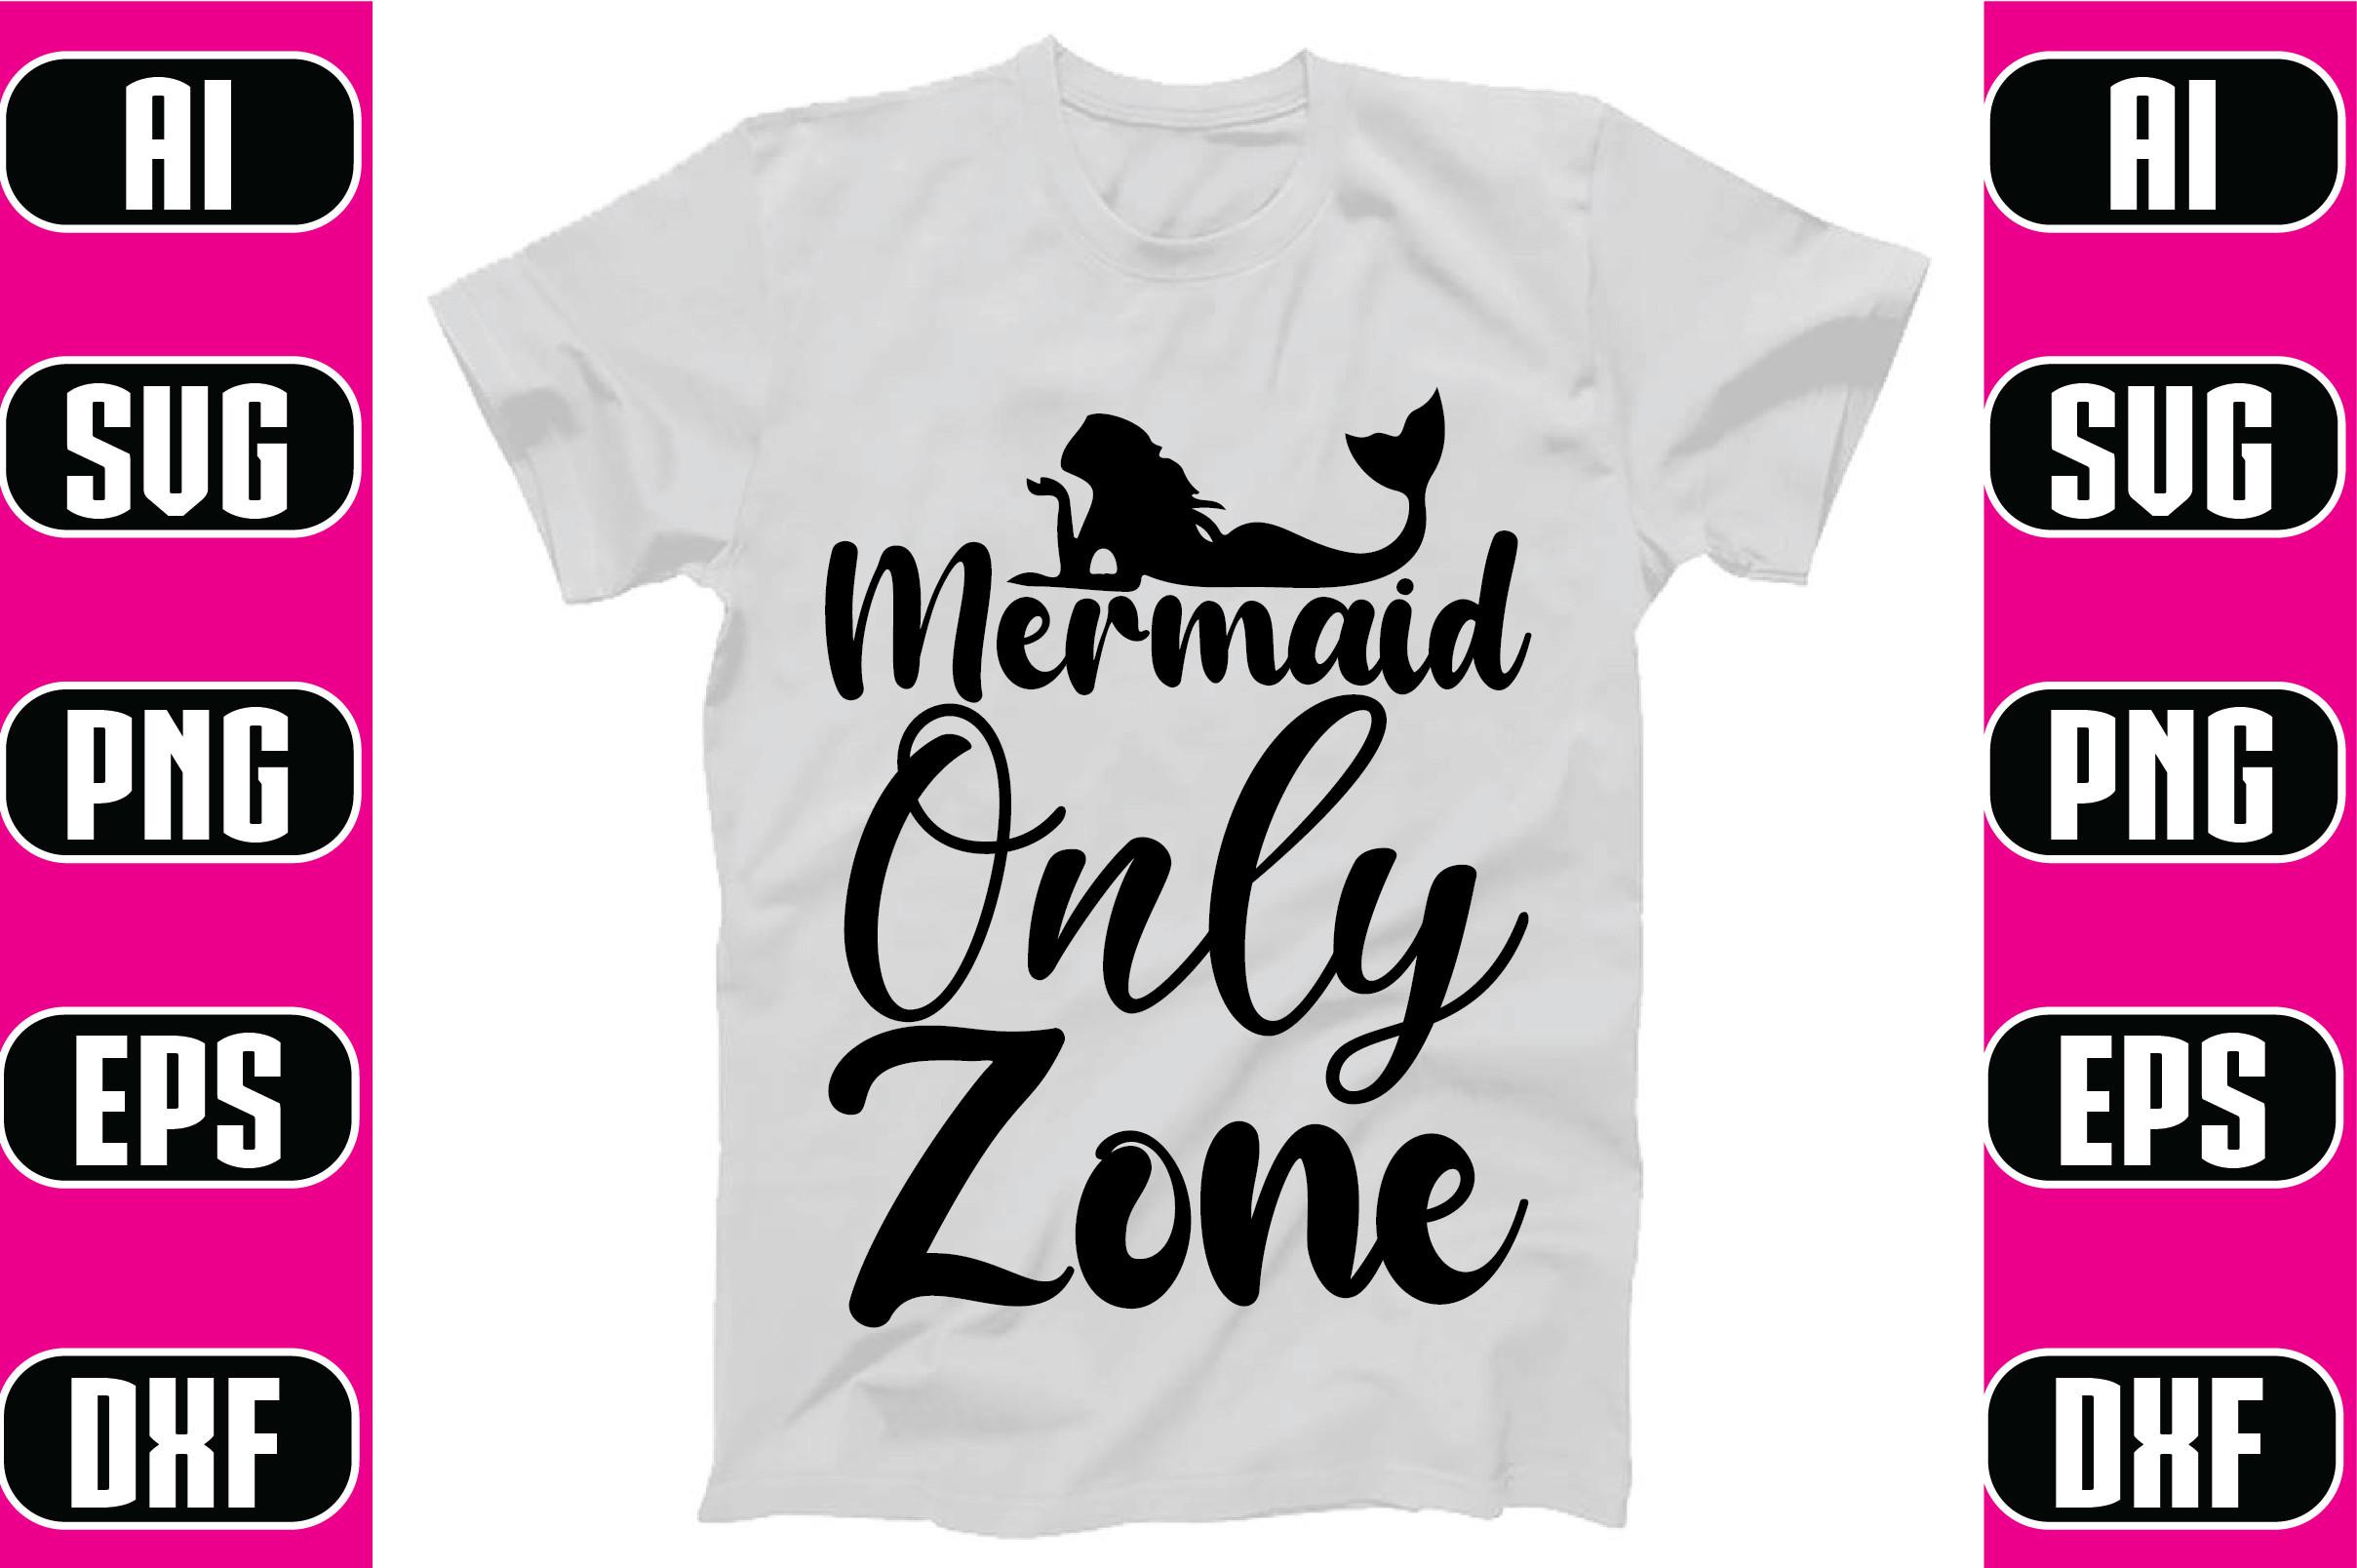 Mermaid Only Zone